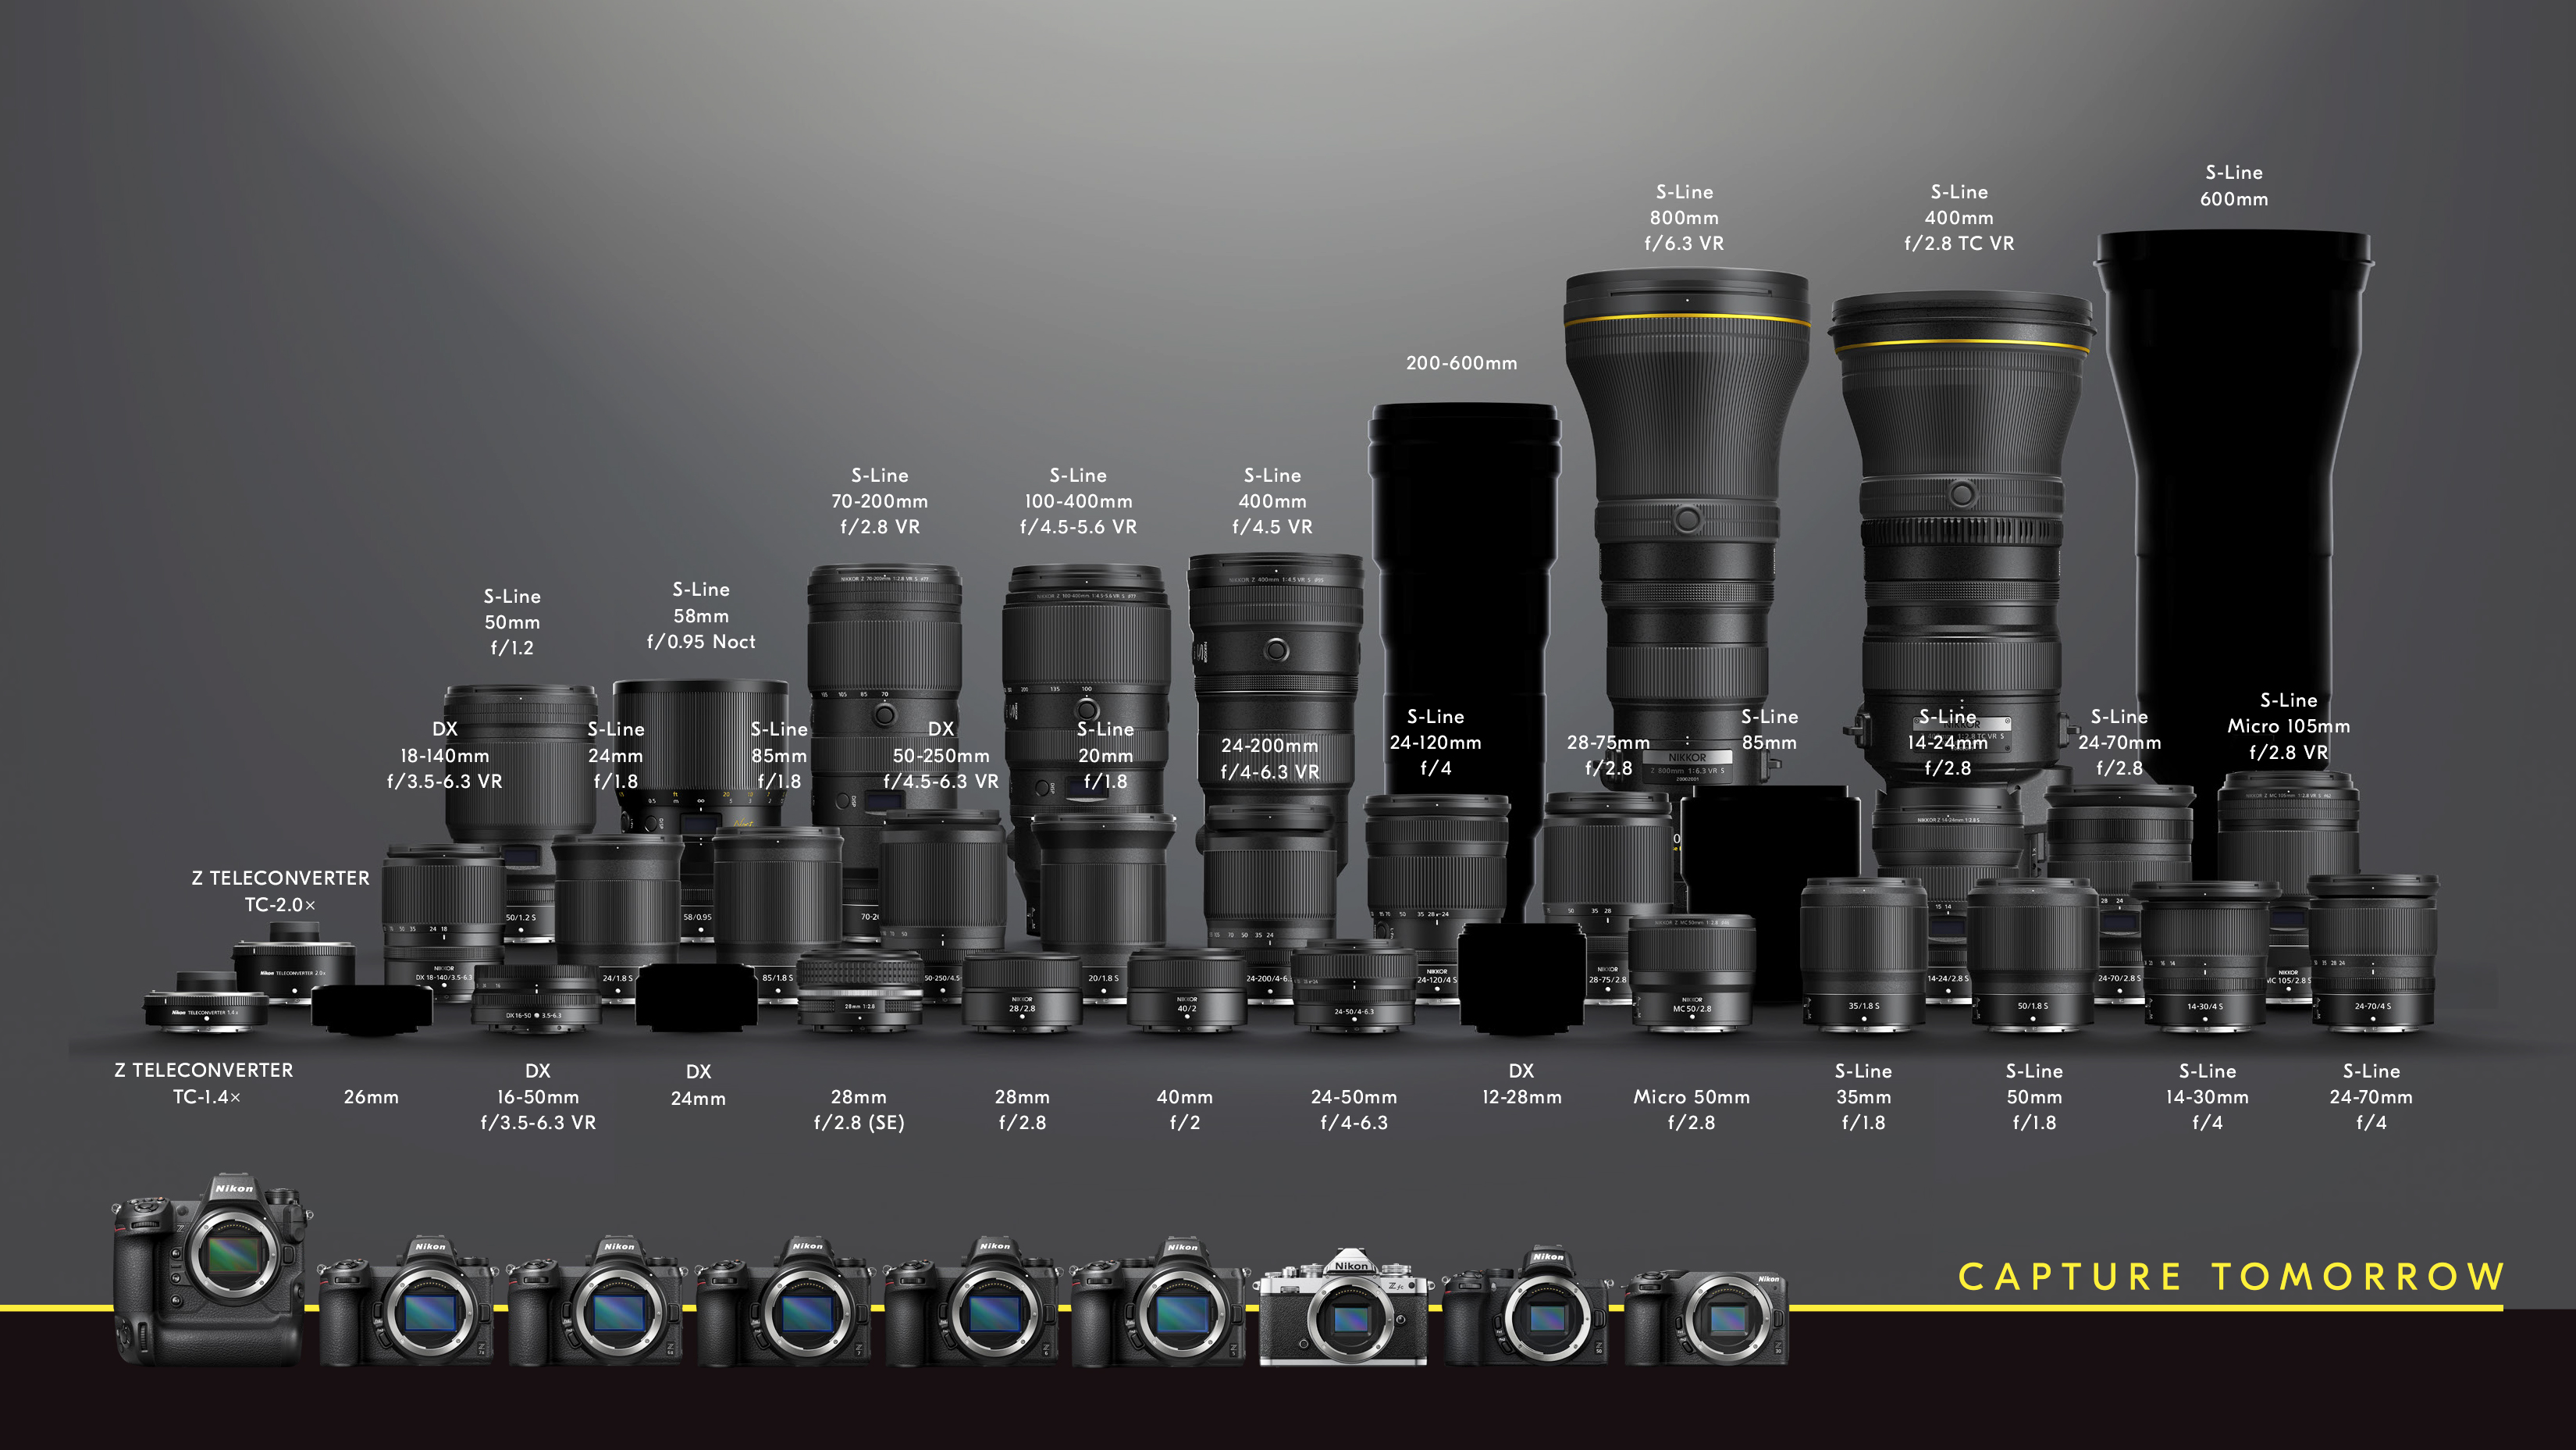 Nikon Z5 camera announced - Nikon Rumors